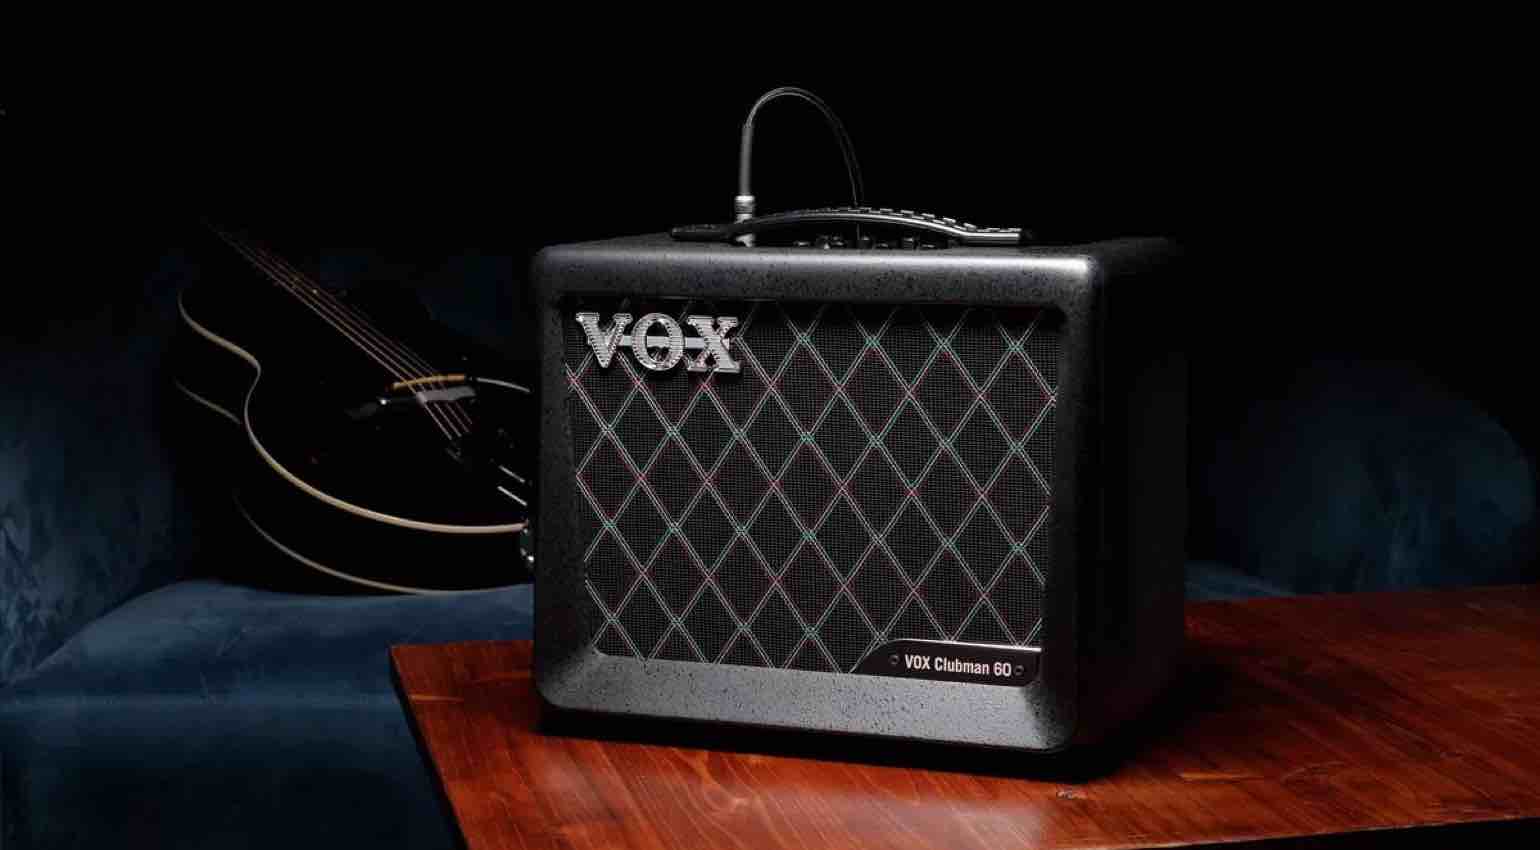 Test: VOX Clubman 60, an electric guitar amplifier